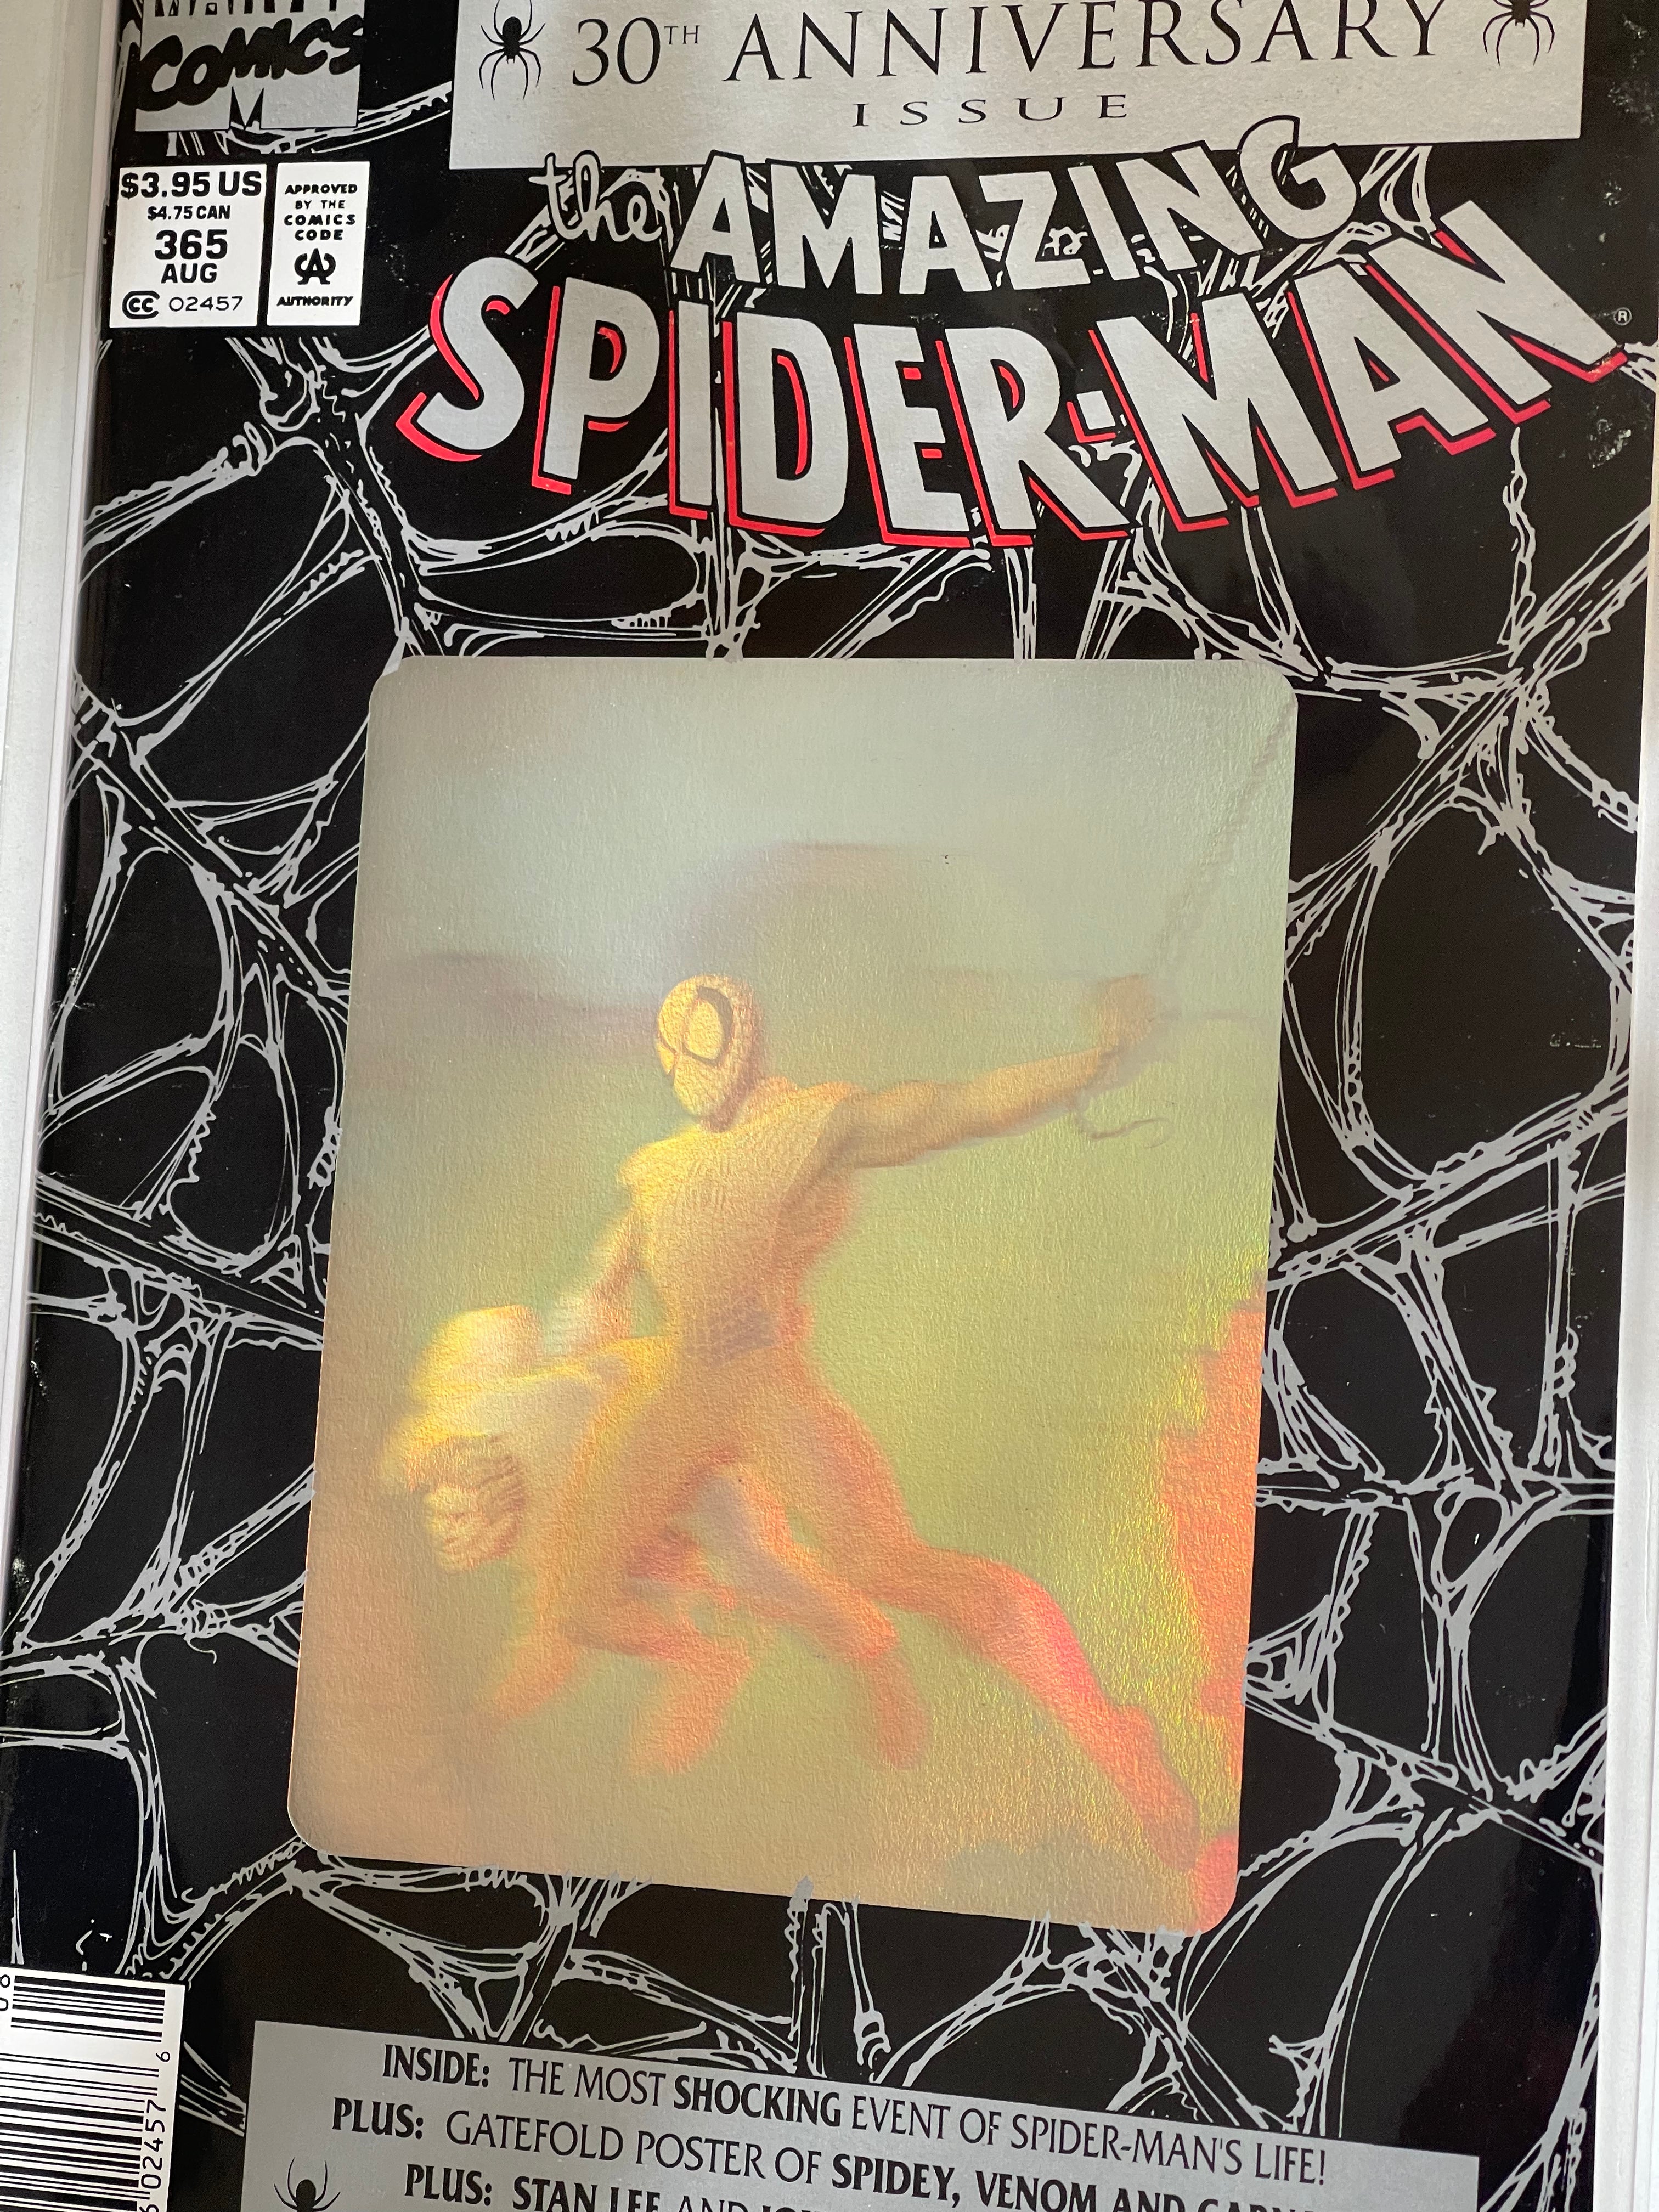 Amazing Spider-Man Hologram cover vintage comic #365